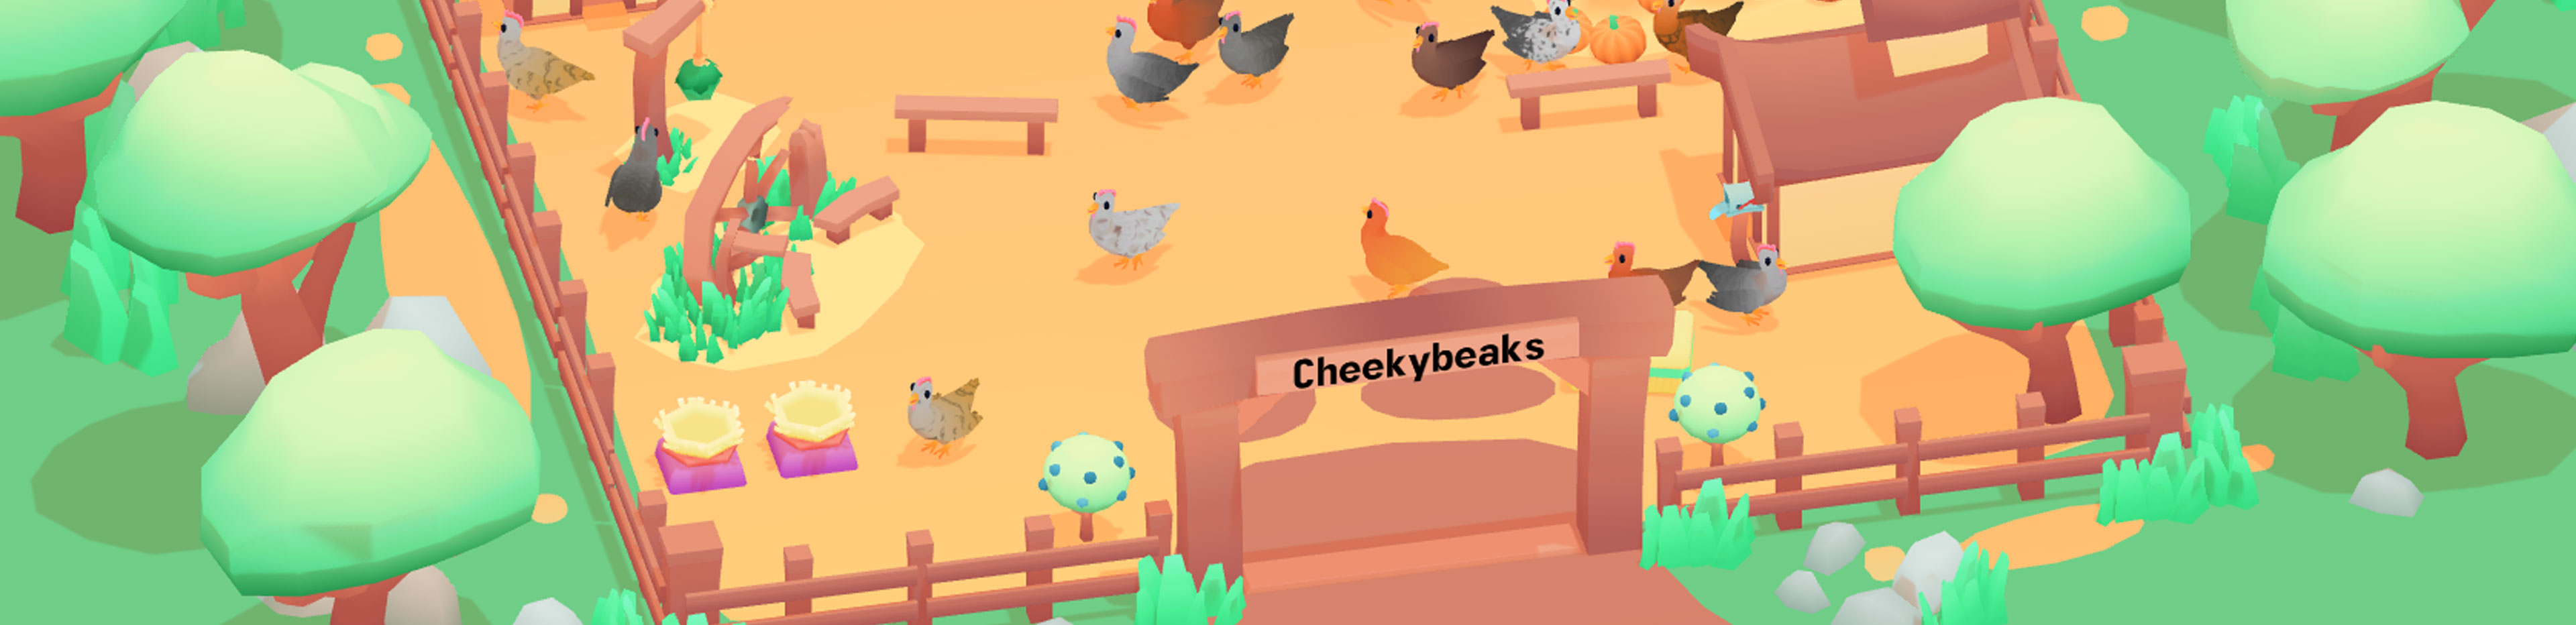 cheeky chooks farm